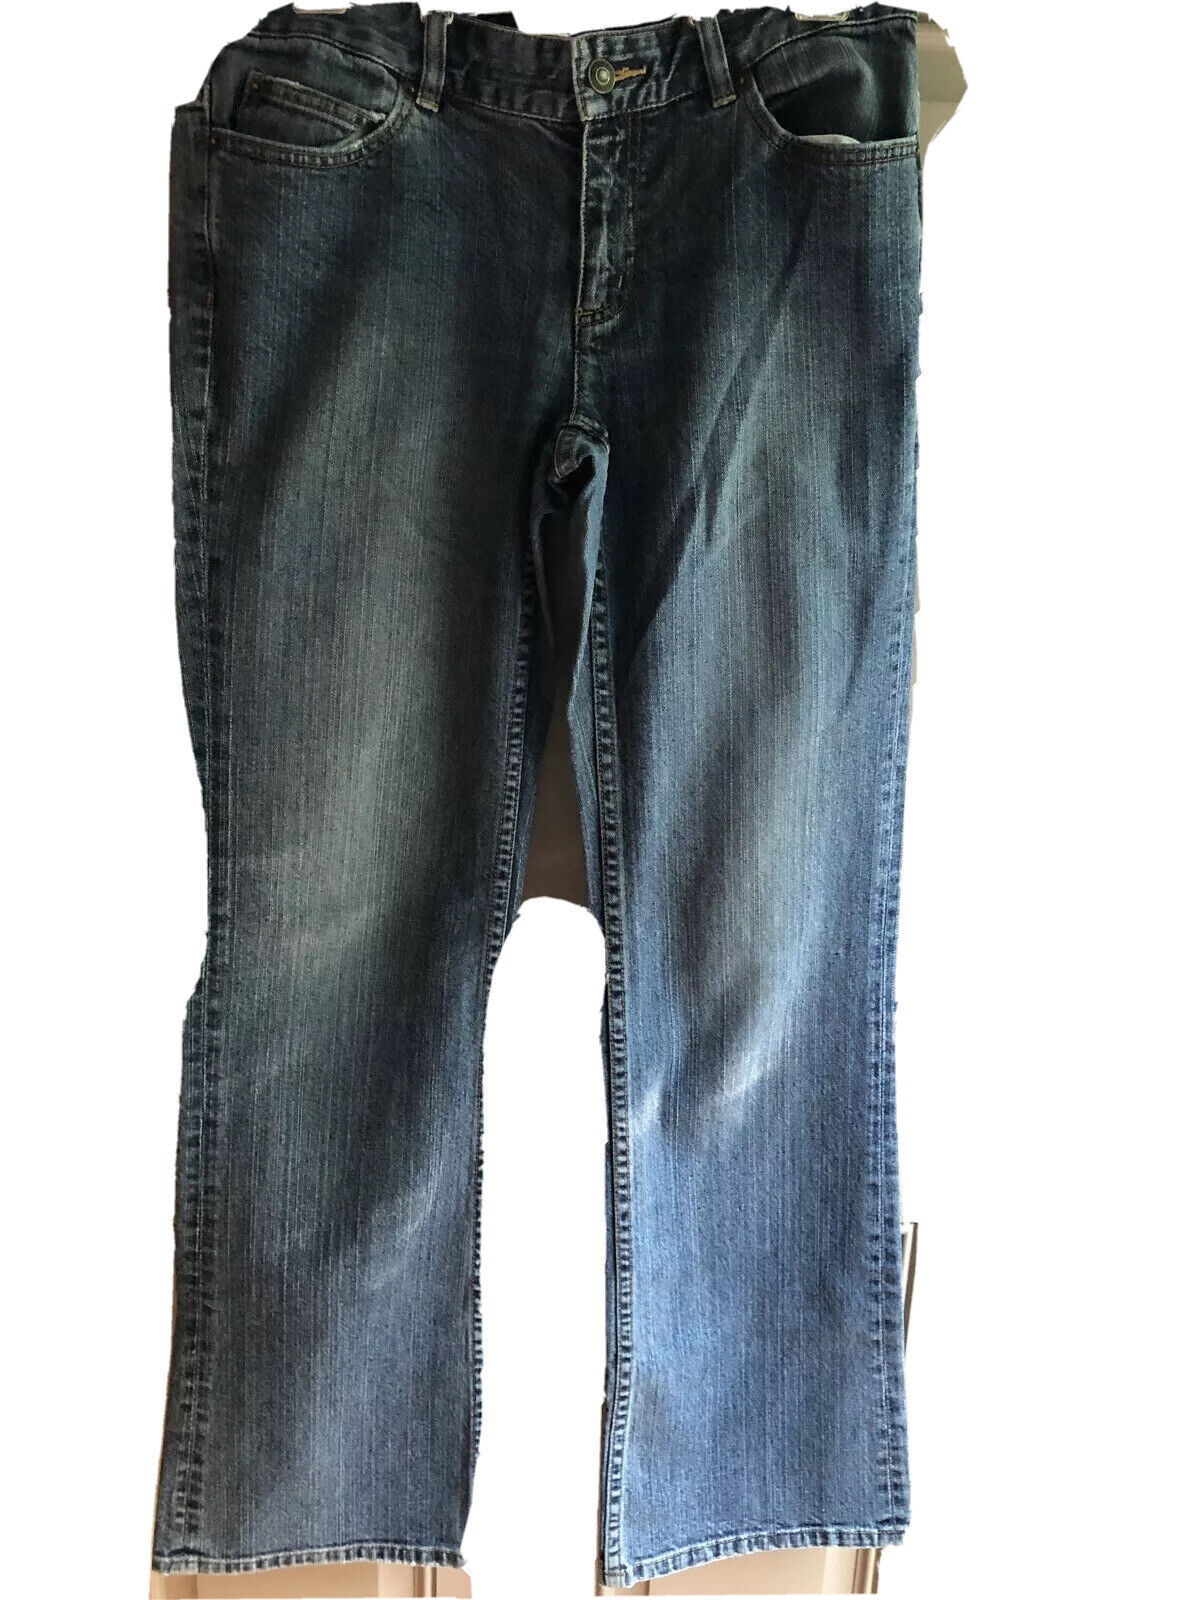 Michael Kors Women's Size 6 Light Blue Jeans Flare CA 45885 | eBay